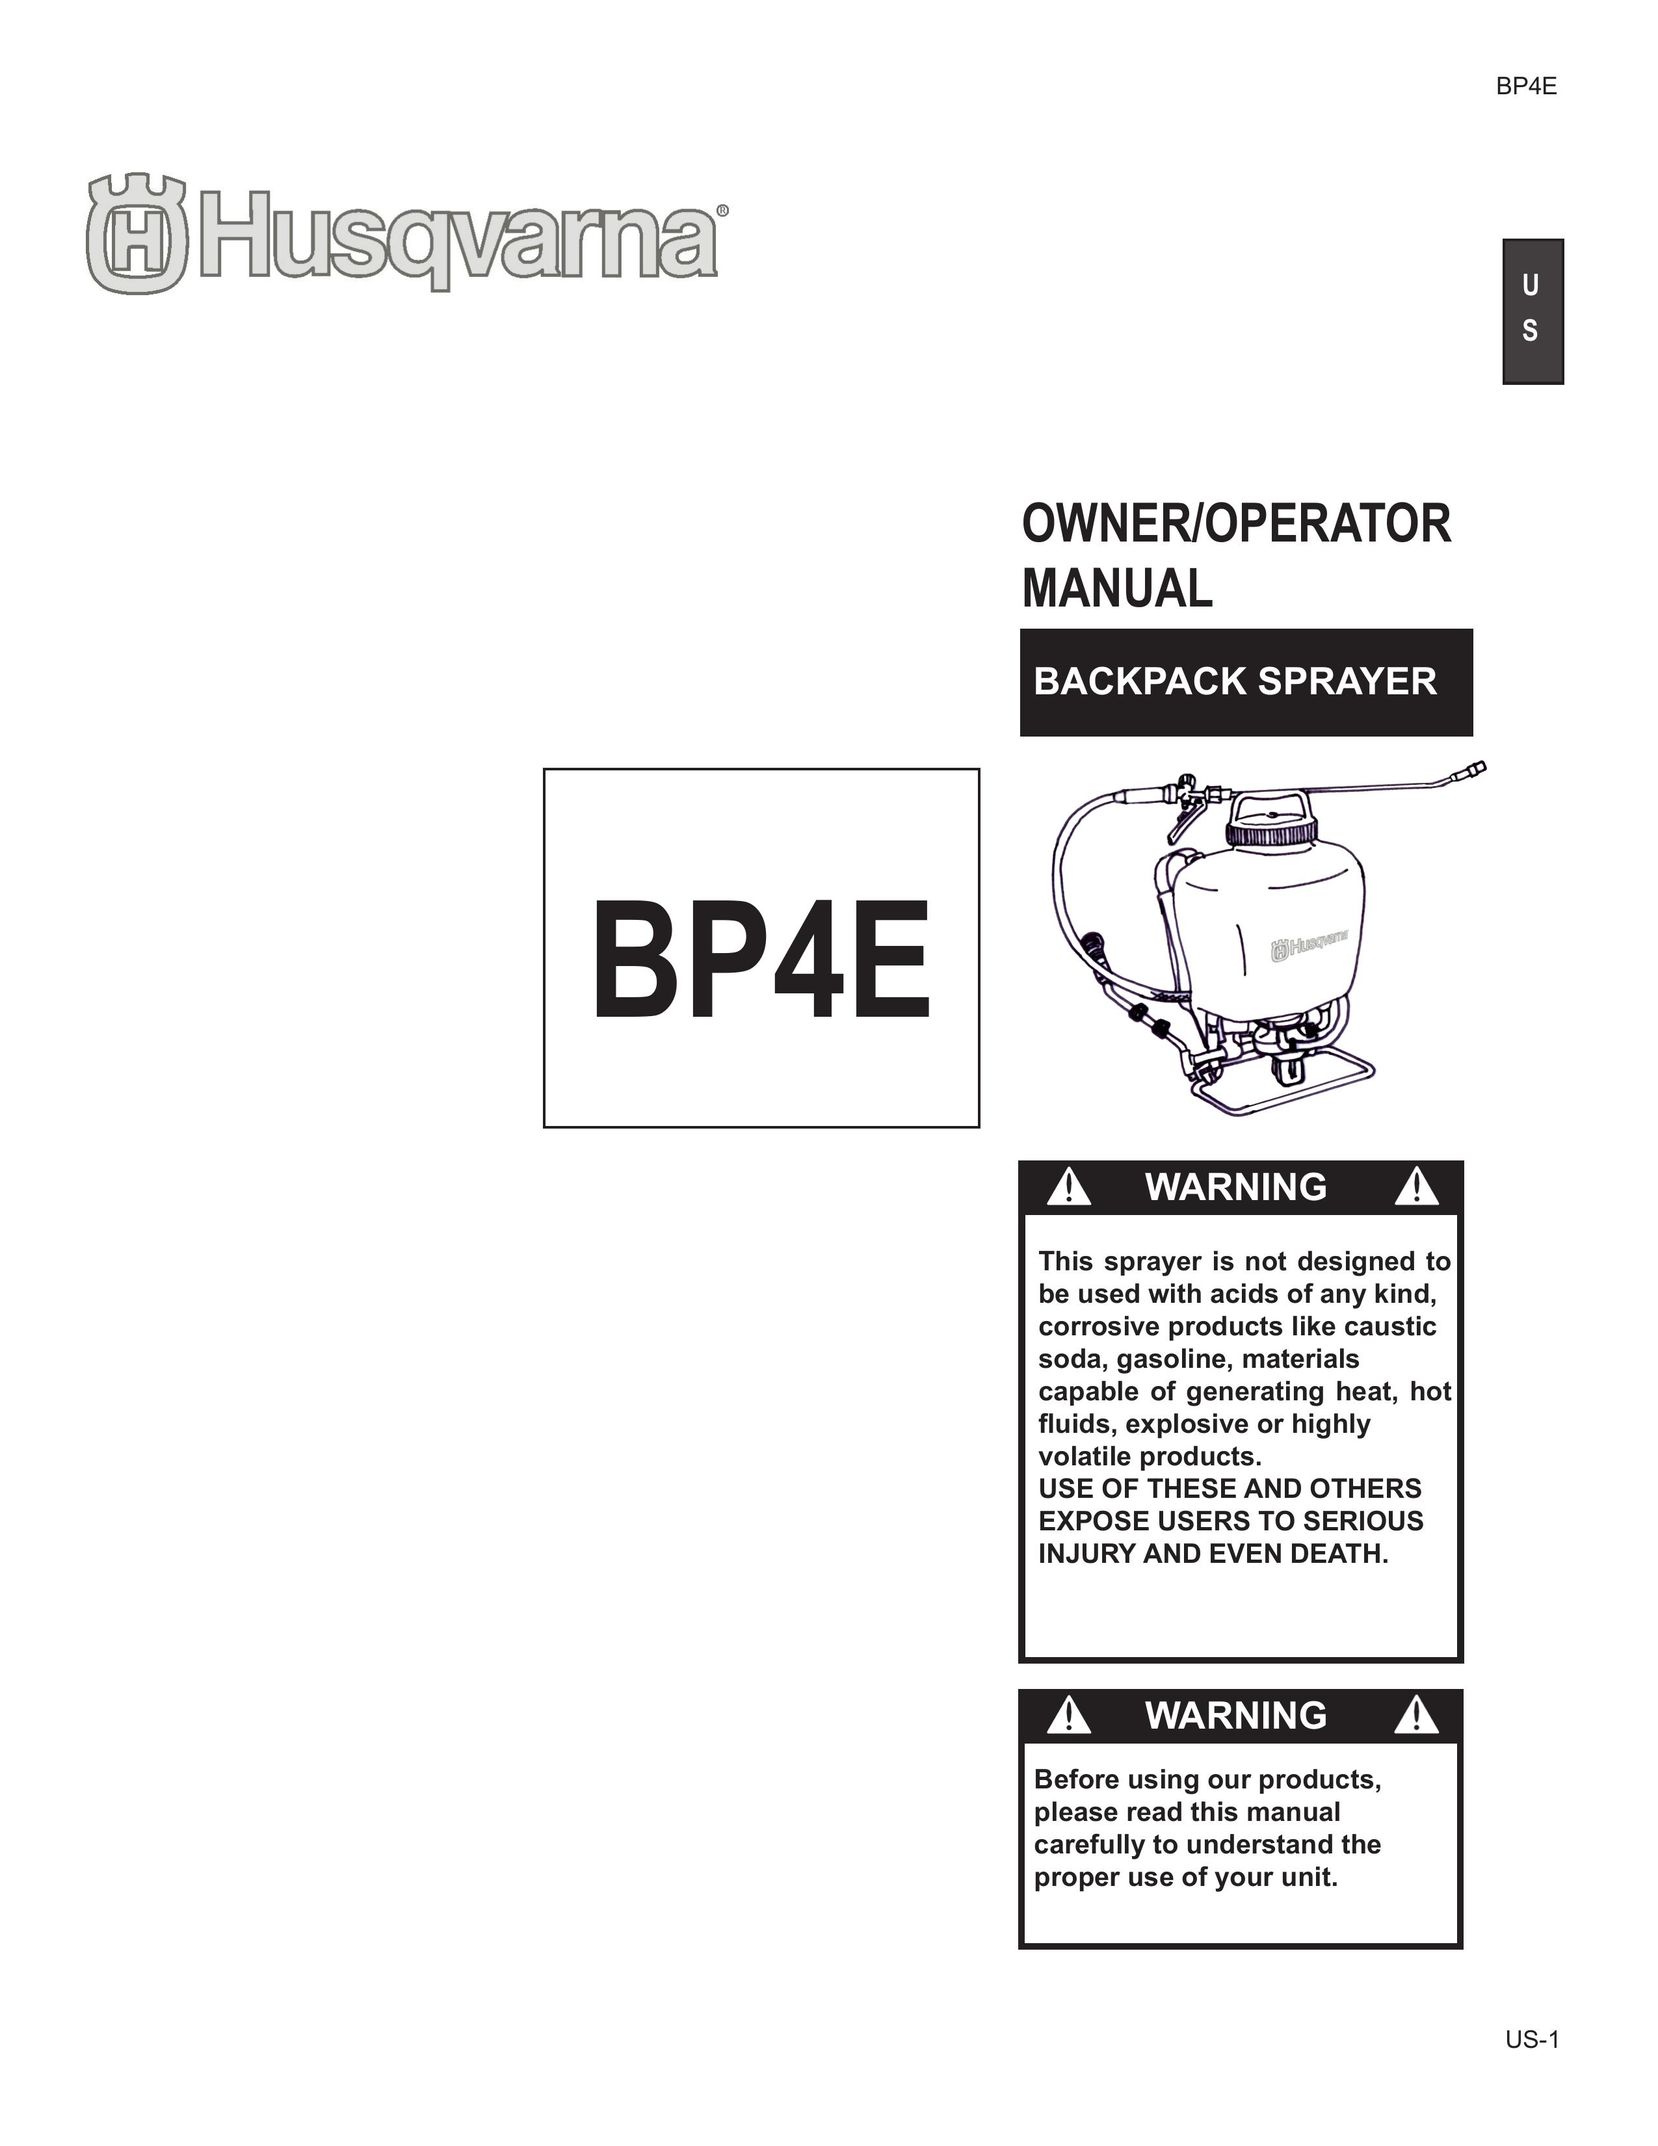 Husqvarna BP4E Paint Sprayer User Manual